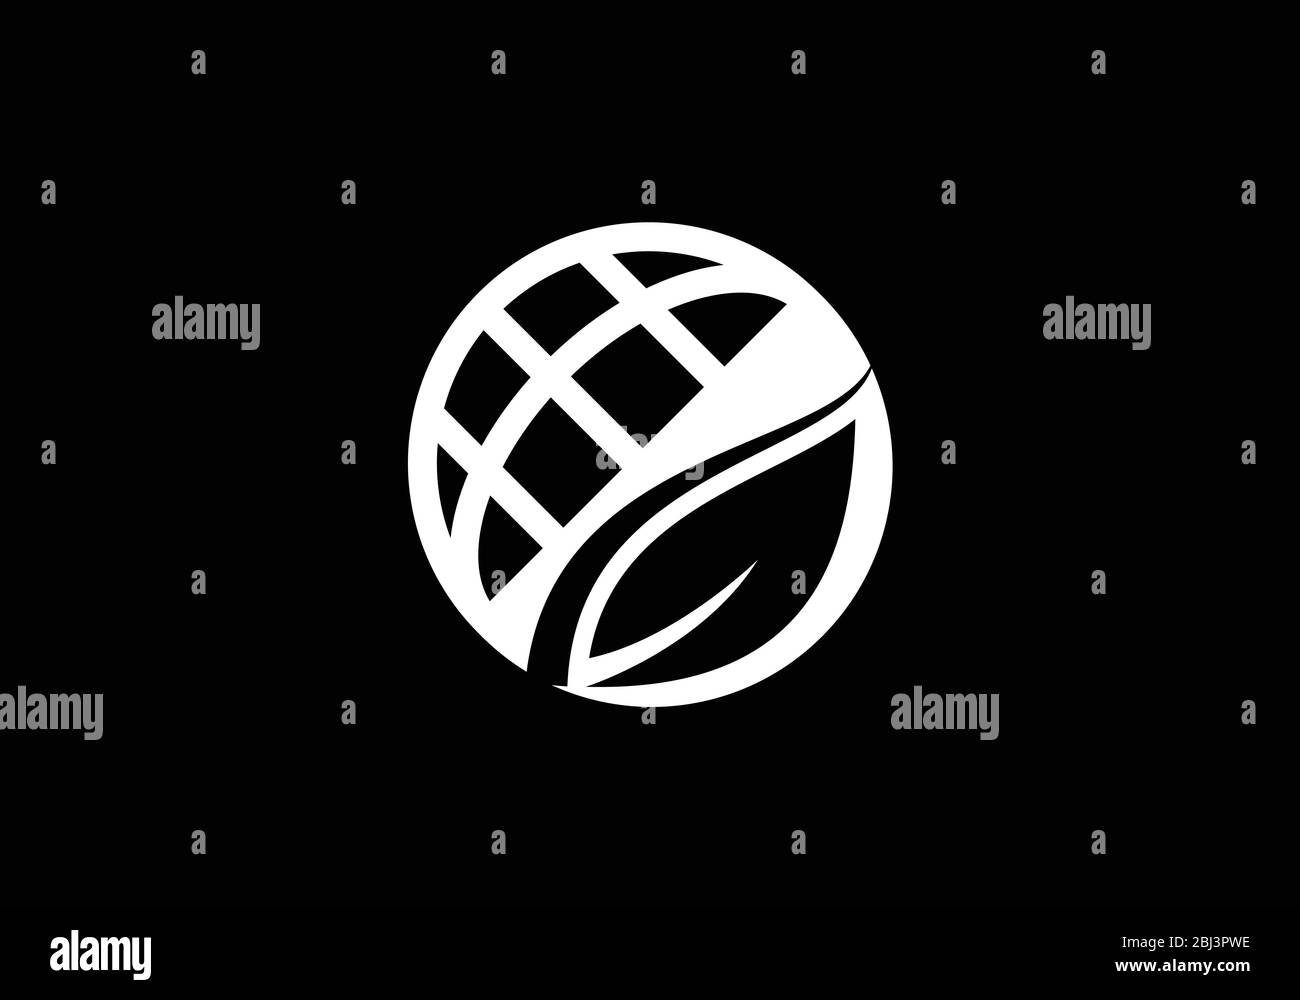 Globe Logo Vorlage für Kommunikation Business Illustration Design Stock Vektor